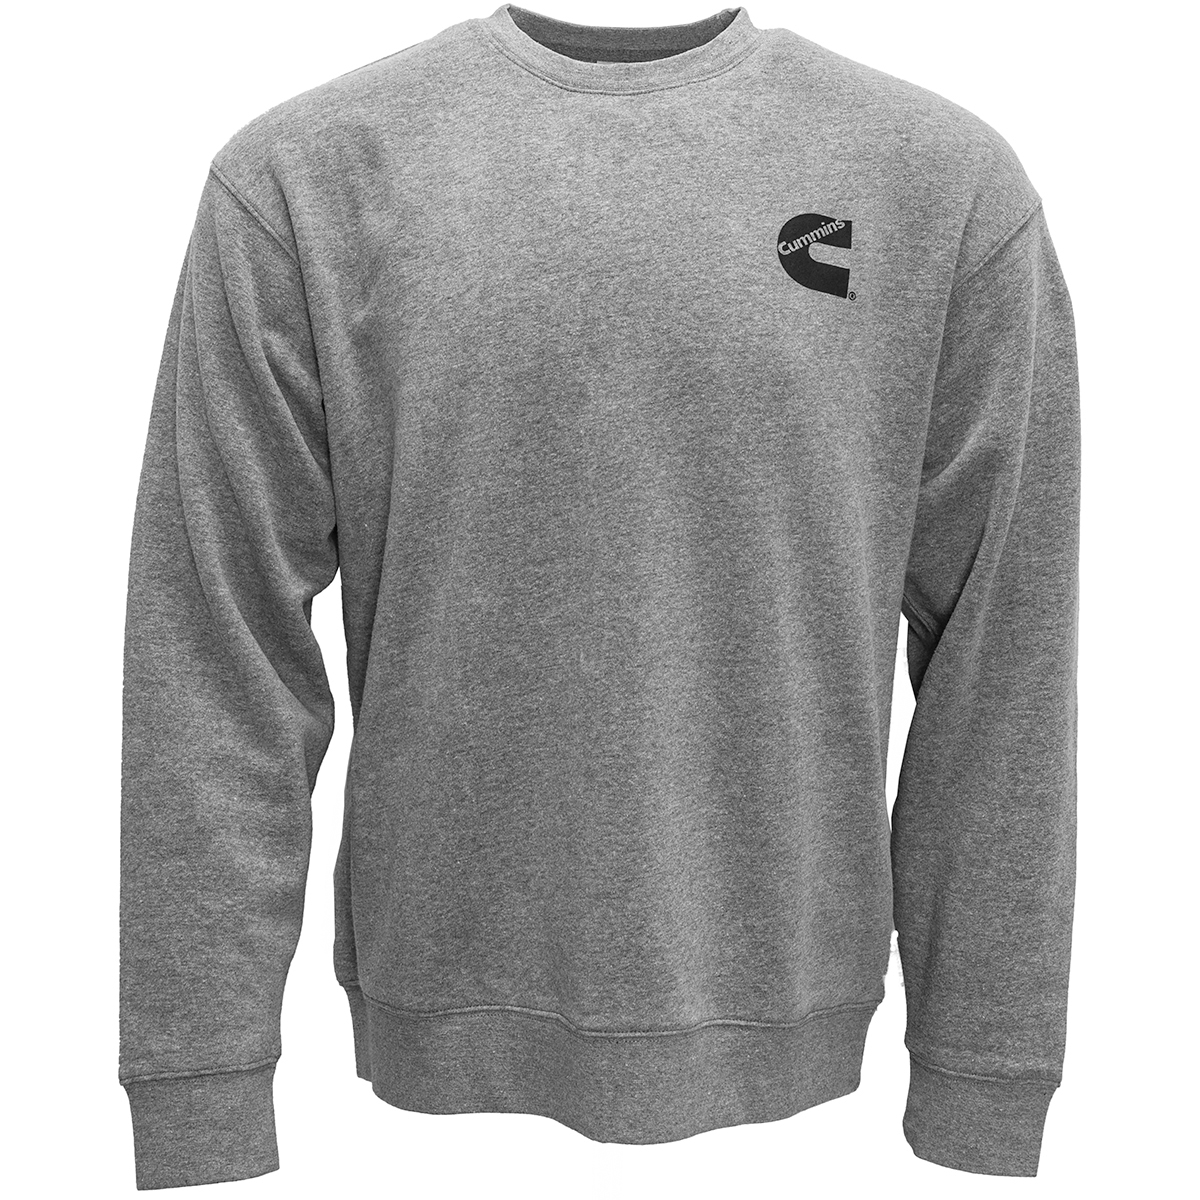 Cummins Unisex Fleece Crewneck Sweatshirt Gray in Comfy Cotton Blend 3XL CMN5027